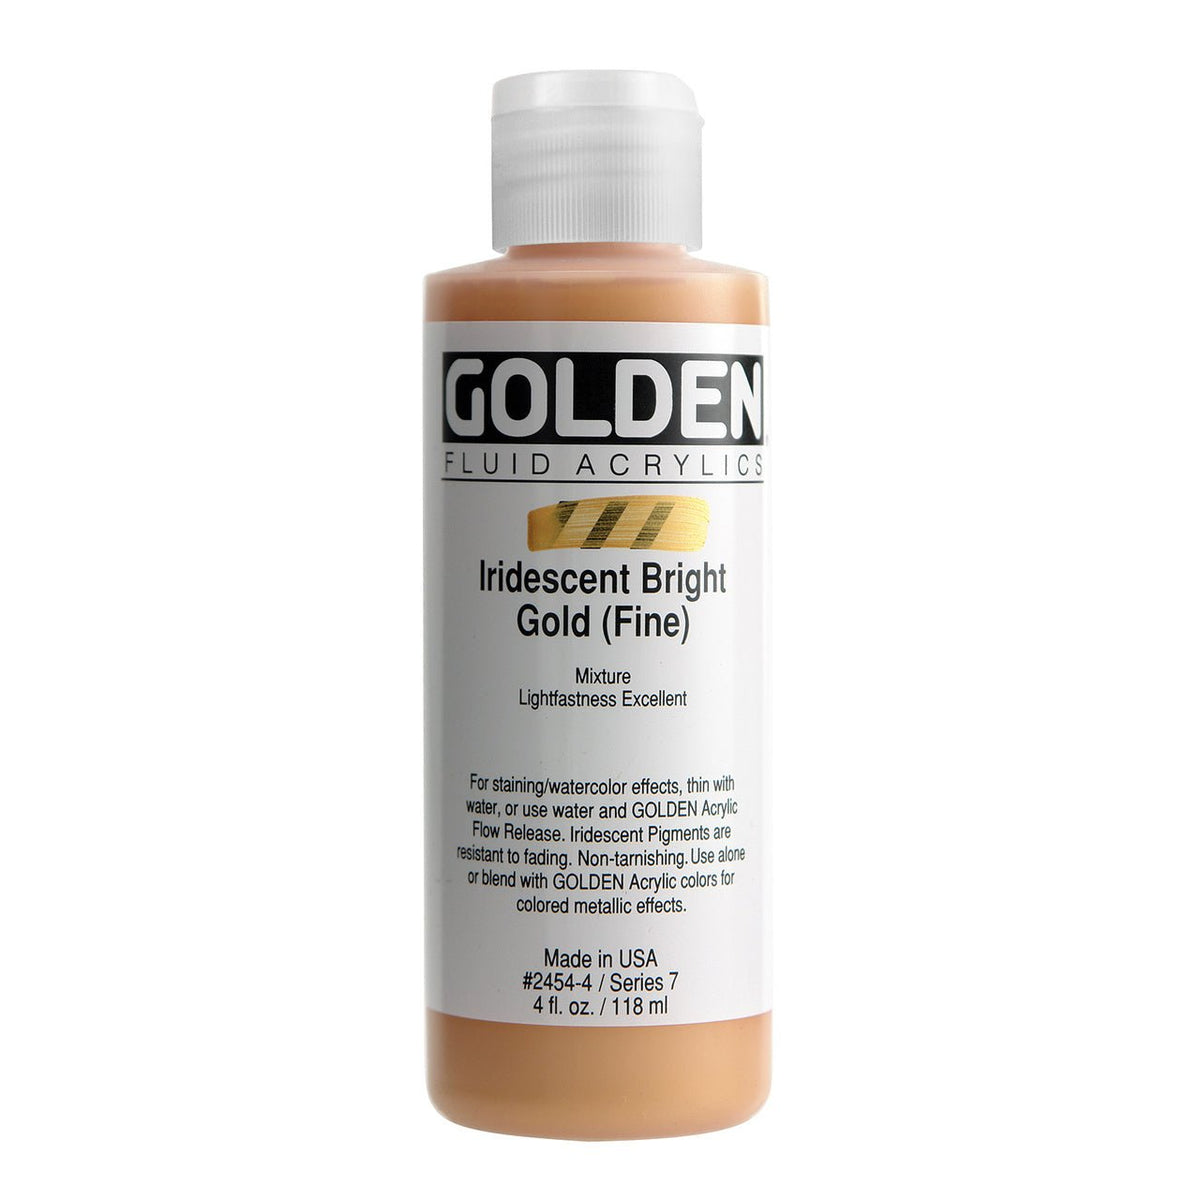 Golden Fluid Acrylic Iridescent Bright Gold (fine) 4 oz - merriartist.com